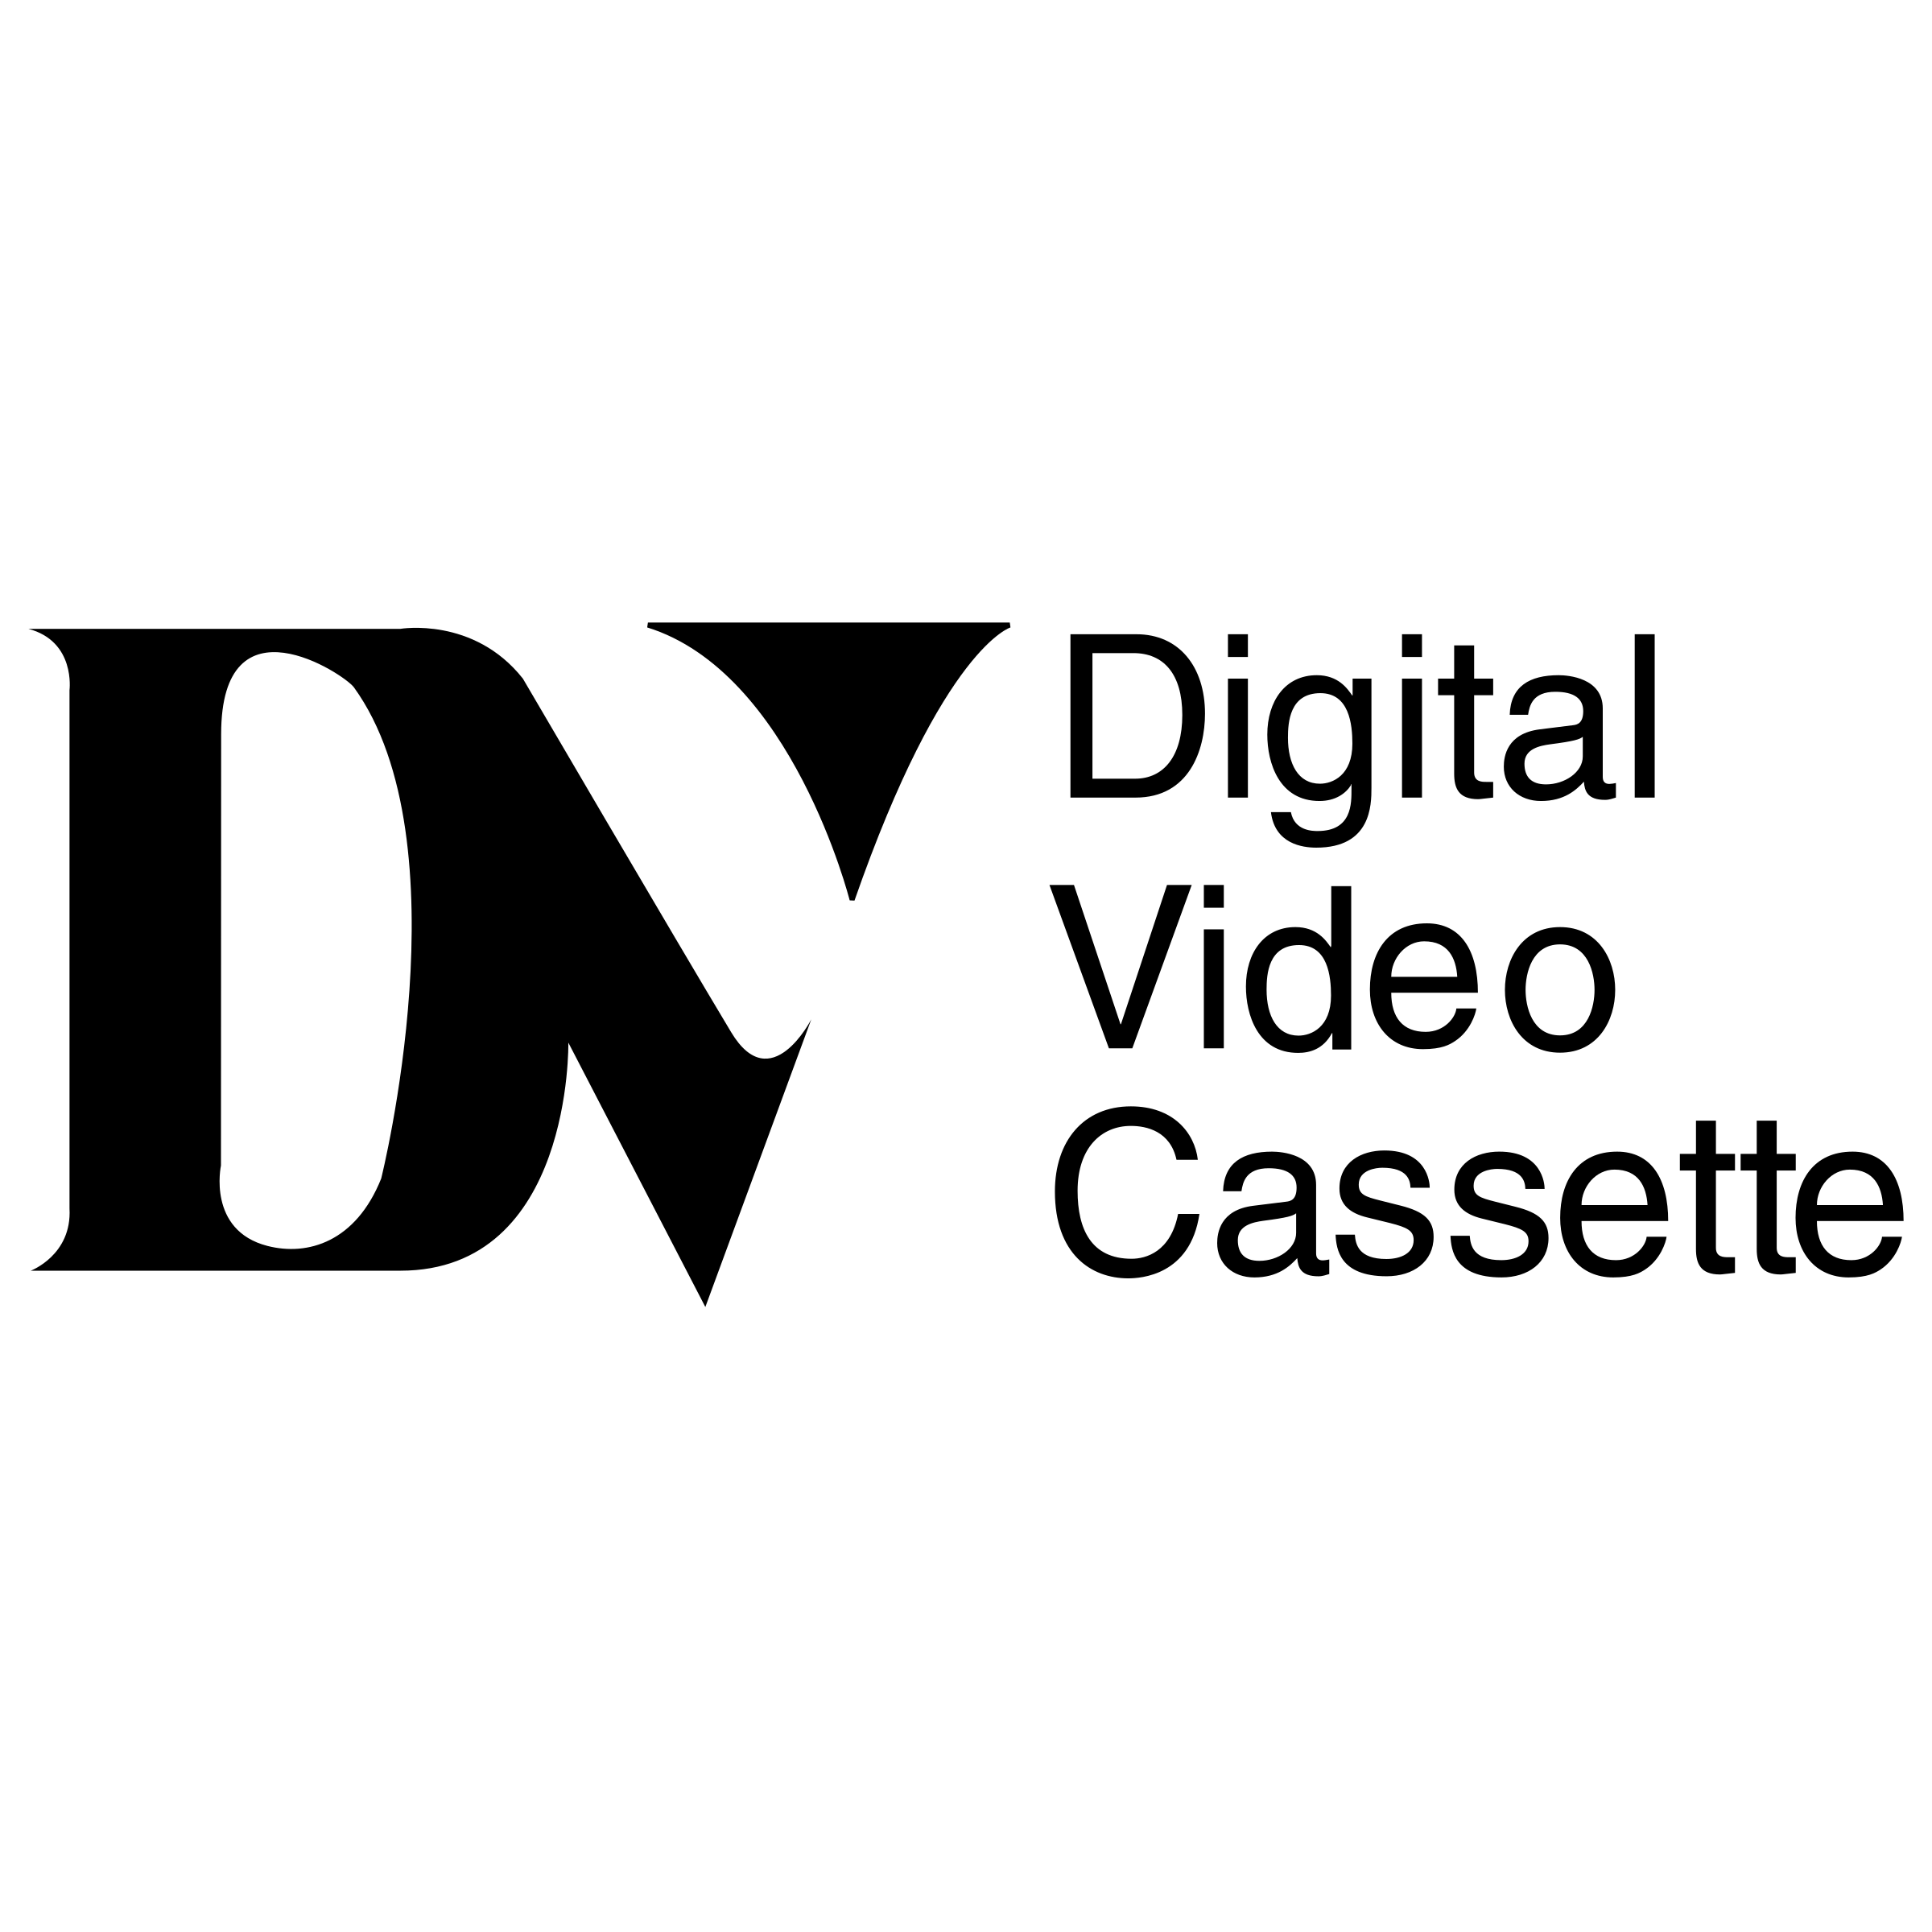 DVC Logo - DVC Logo PNG Transparent & SVG Vector - Freebie Supply